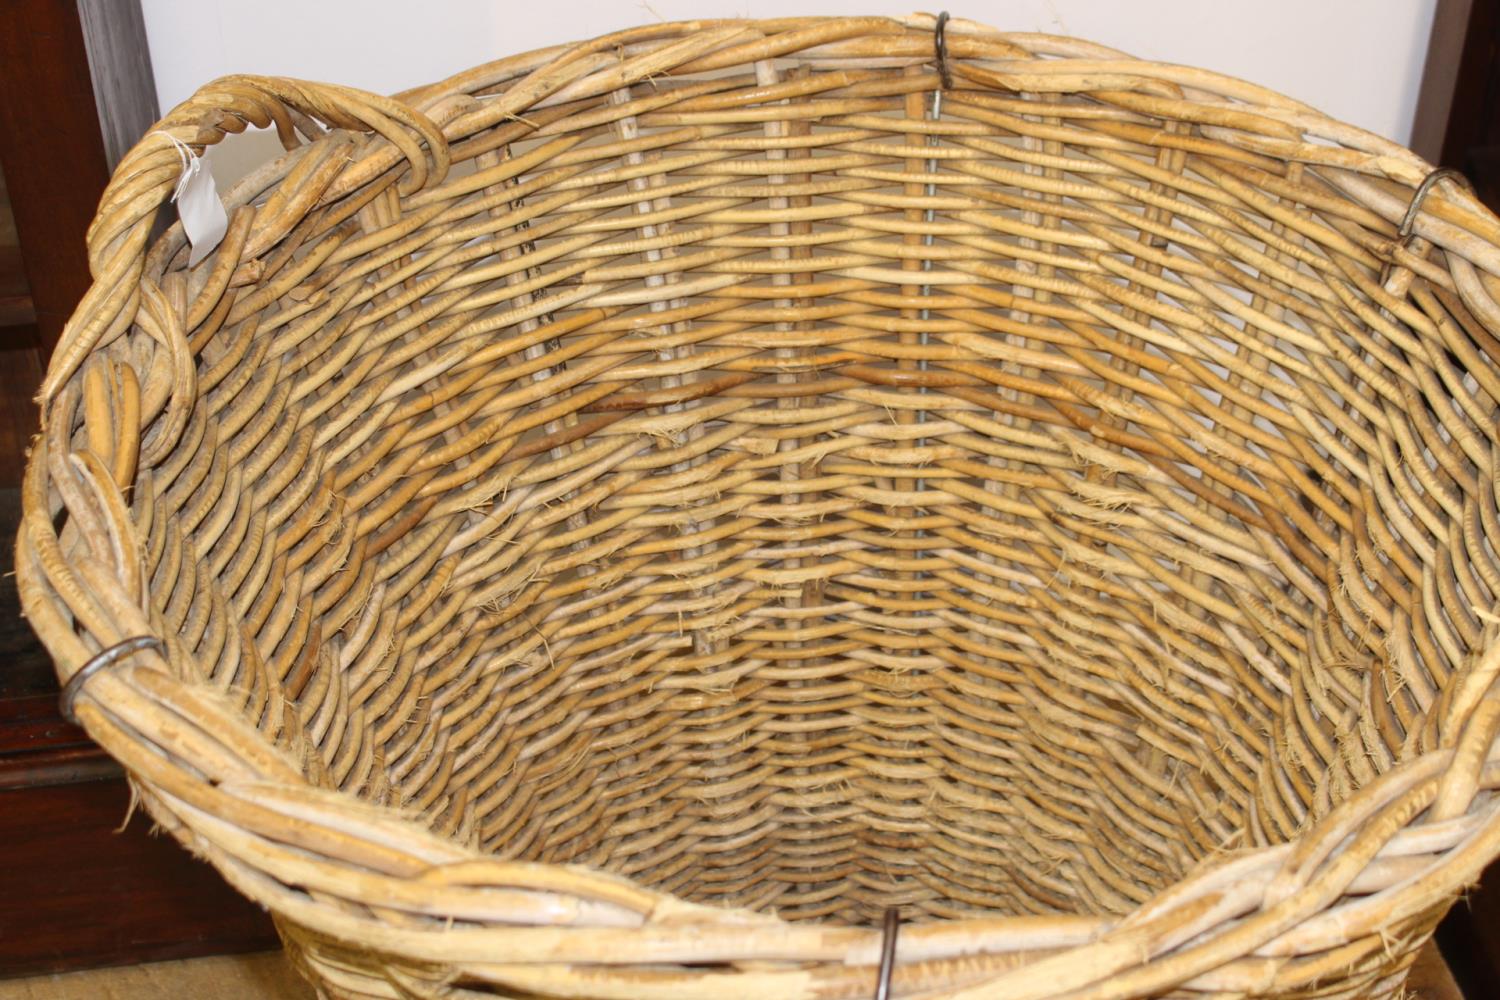 Wicker laundry/ log basket { 80cm H X 60cm Dia }. - Image 2 of 3